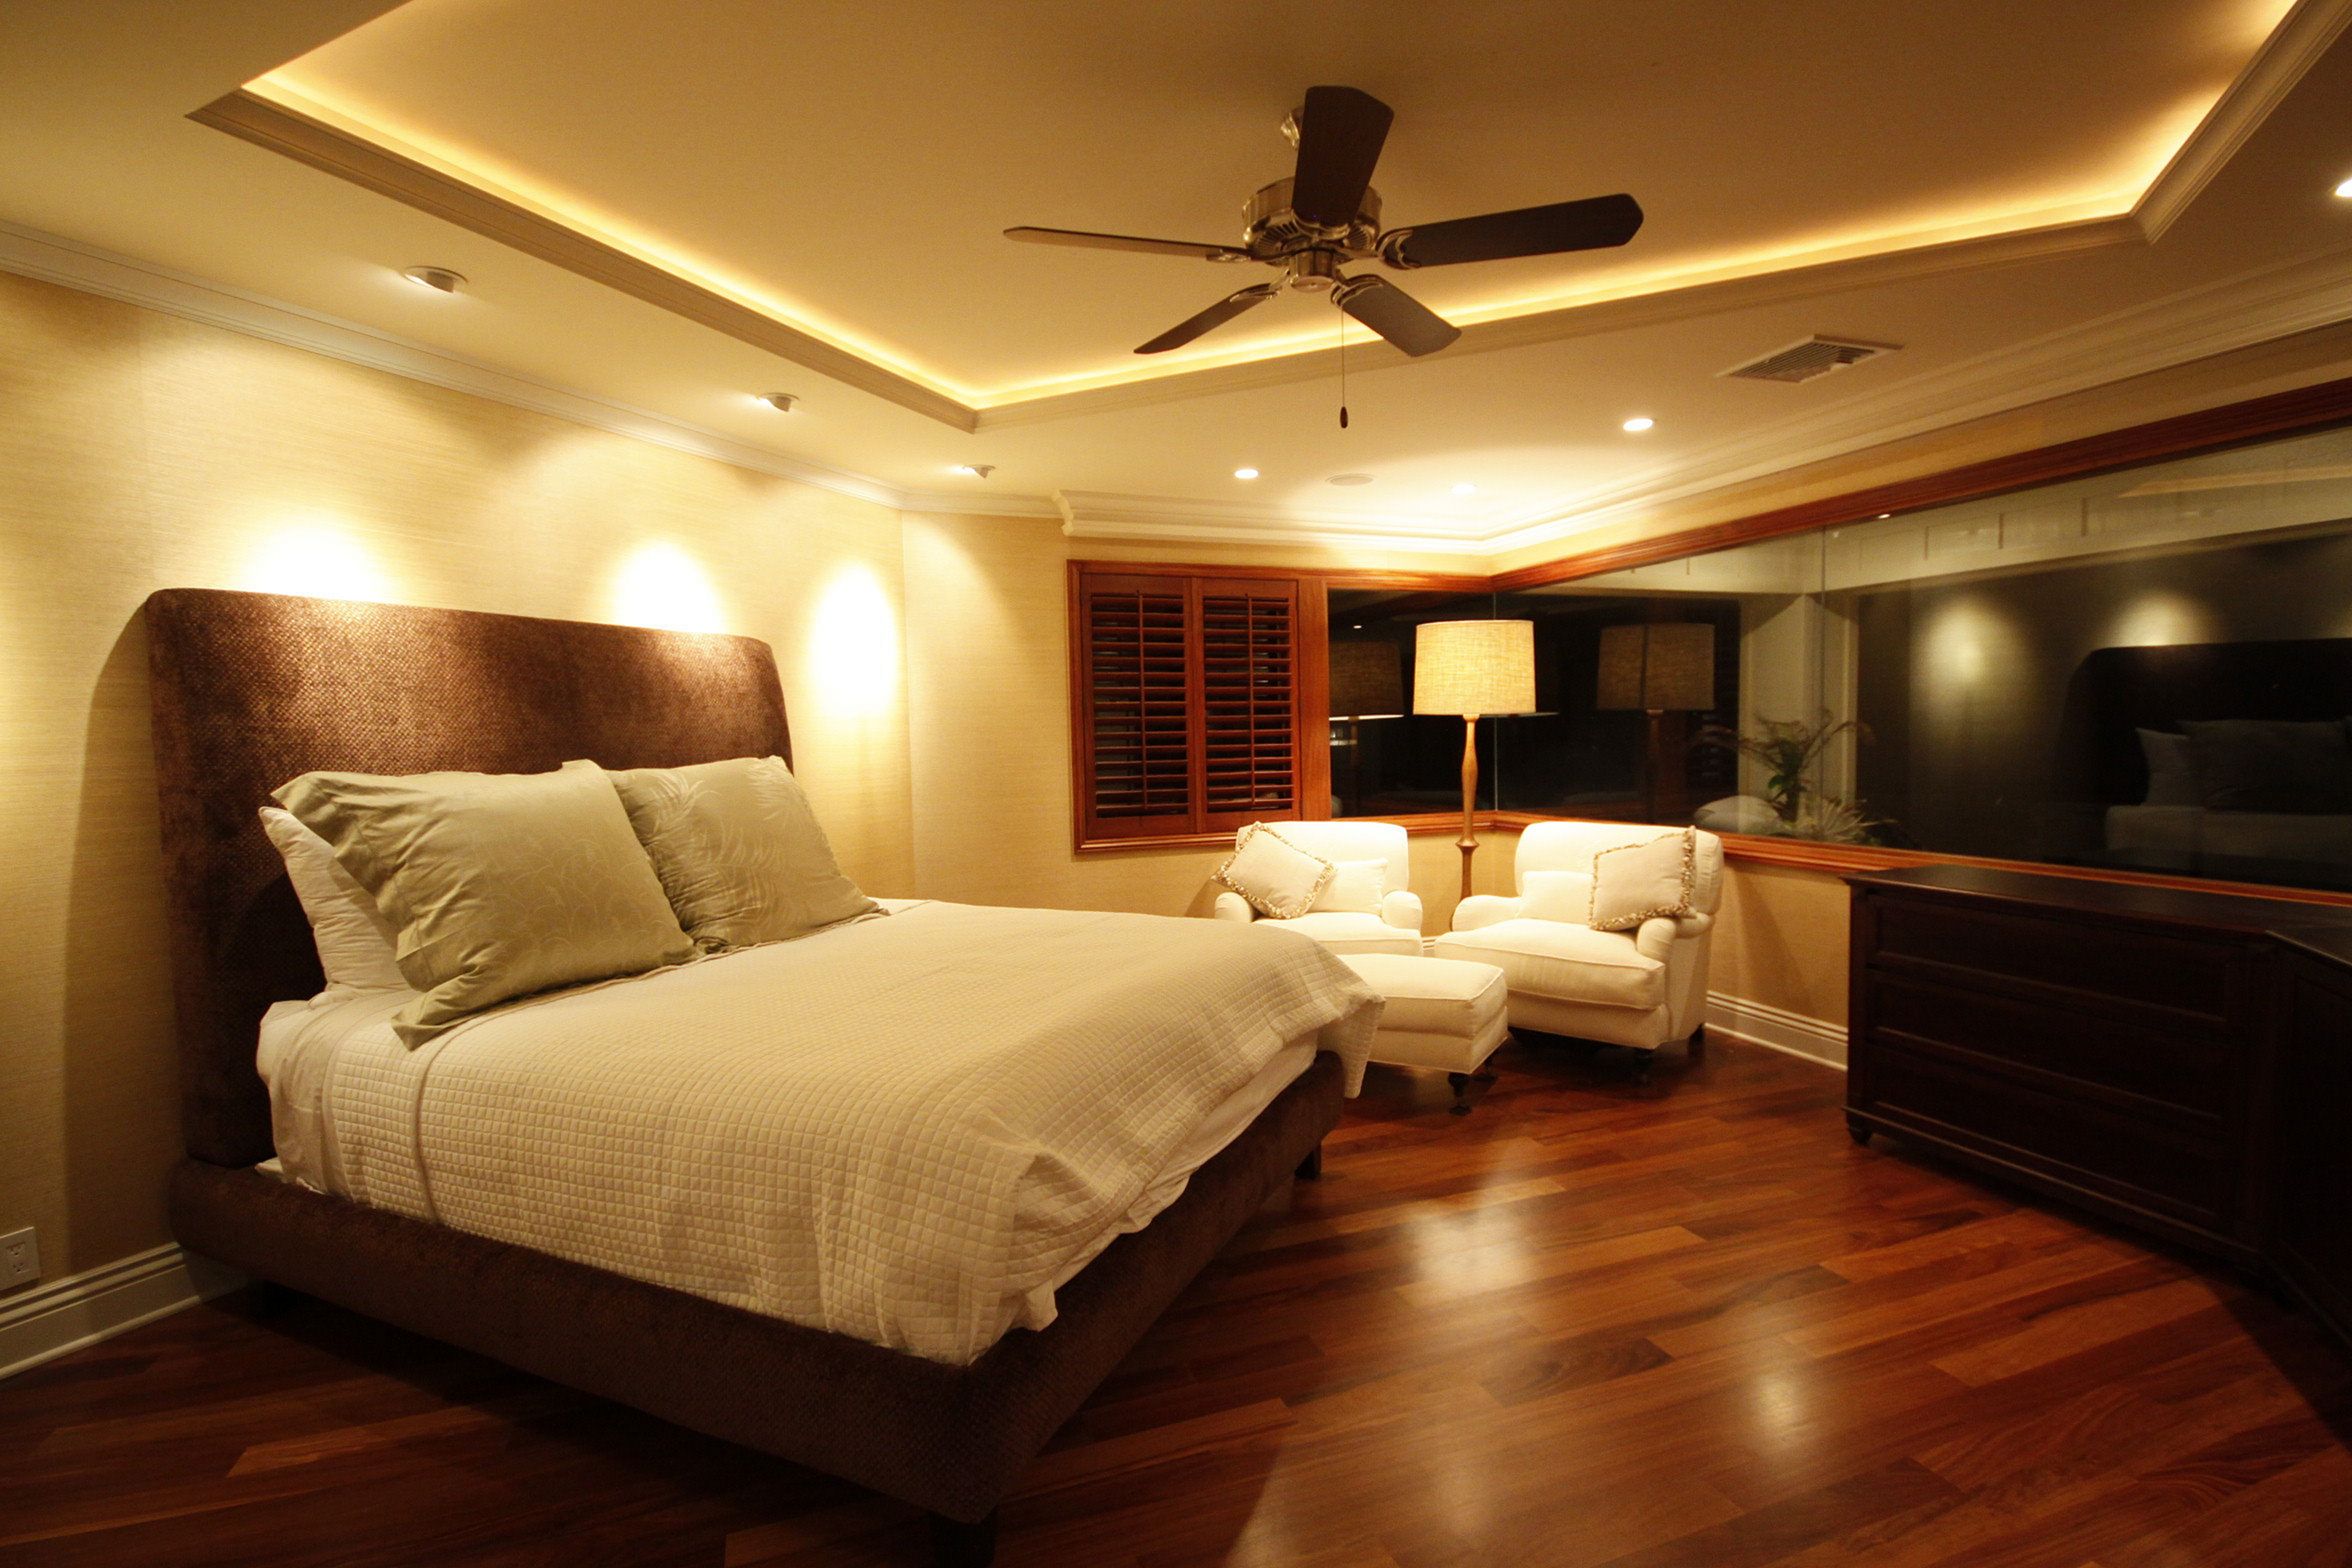 Bedroom Lighting Design Ideas 19